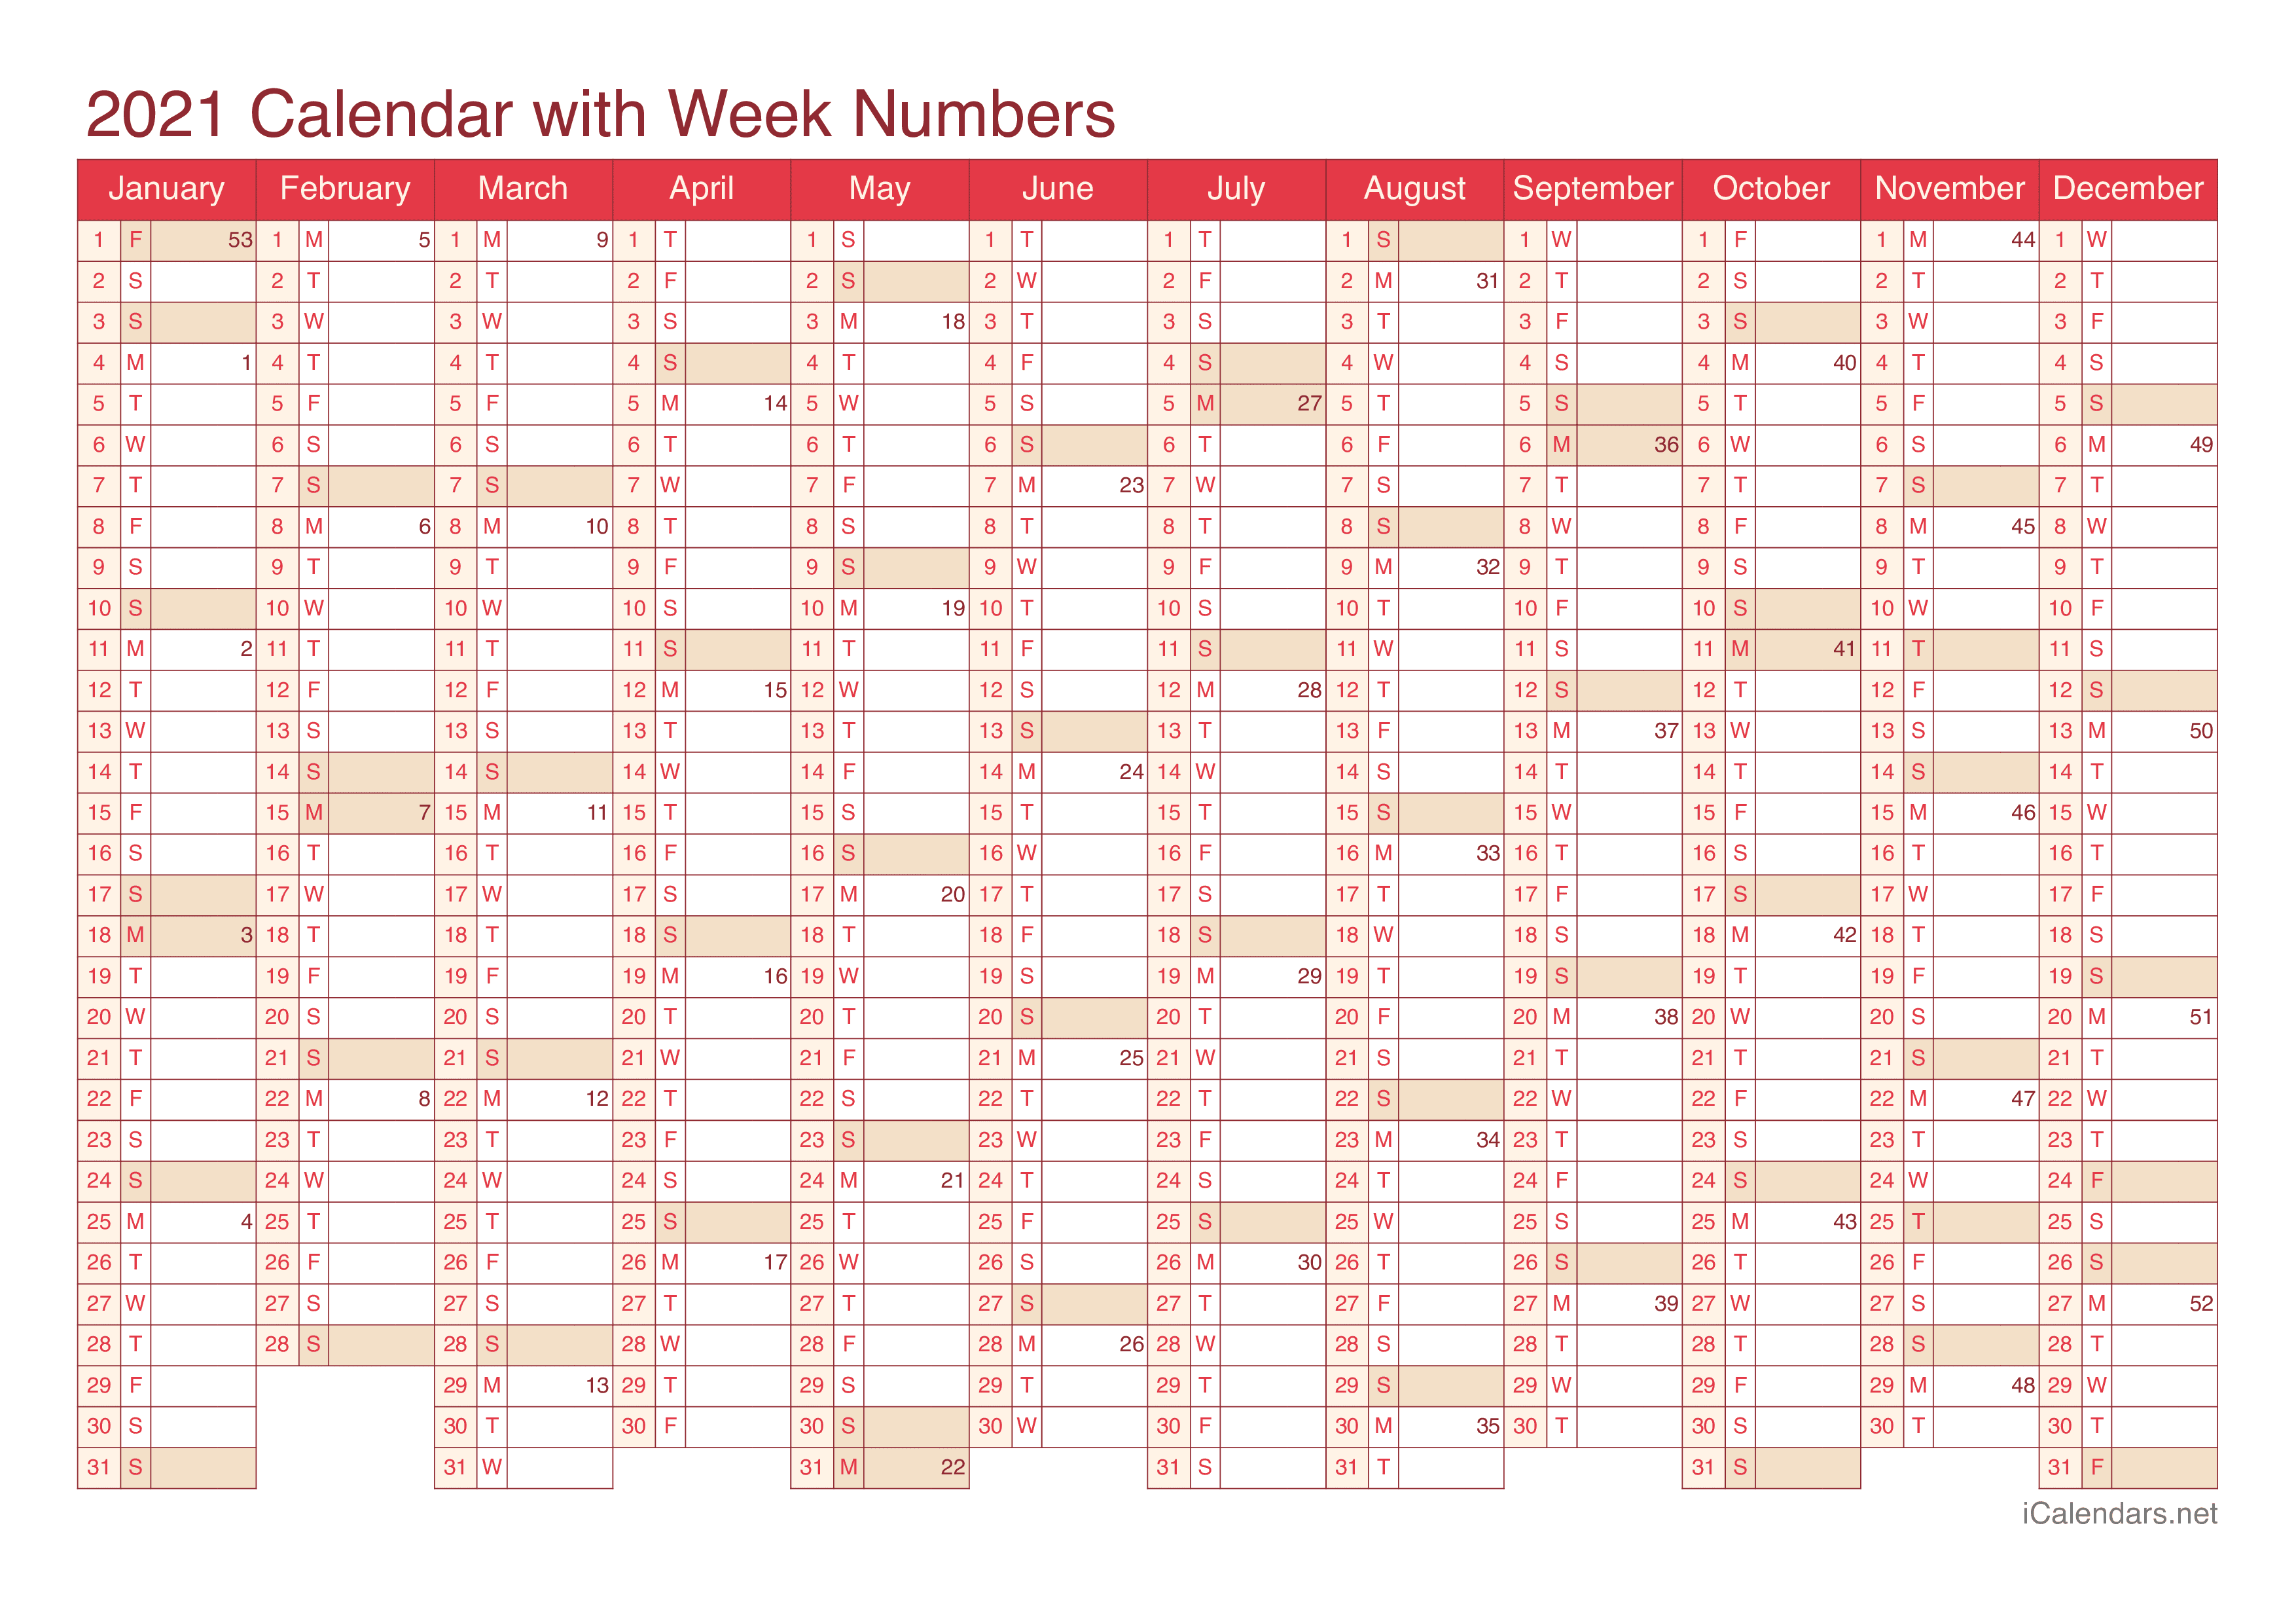 2021 Calendar with week numbers - Cherry